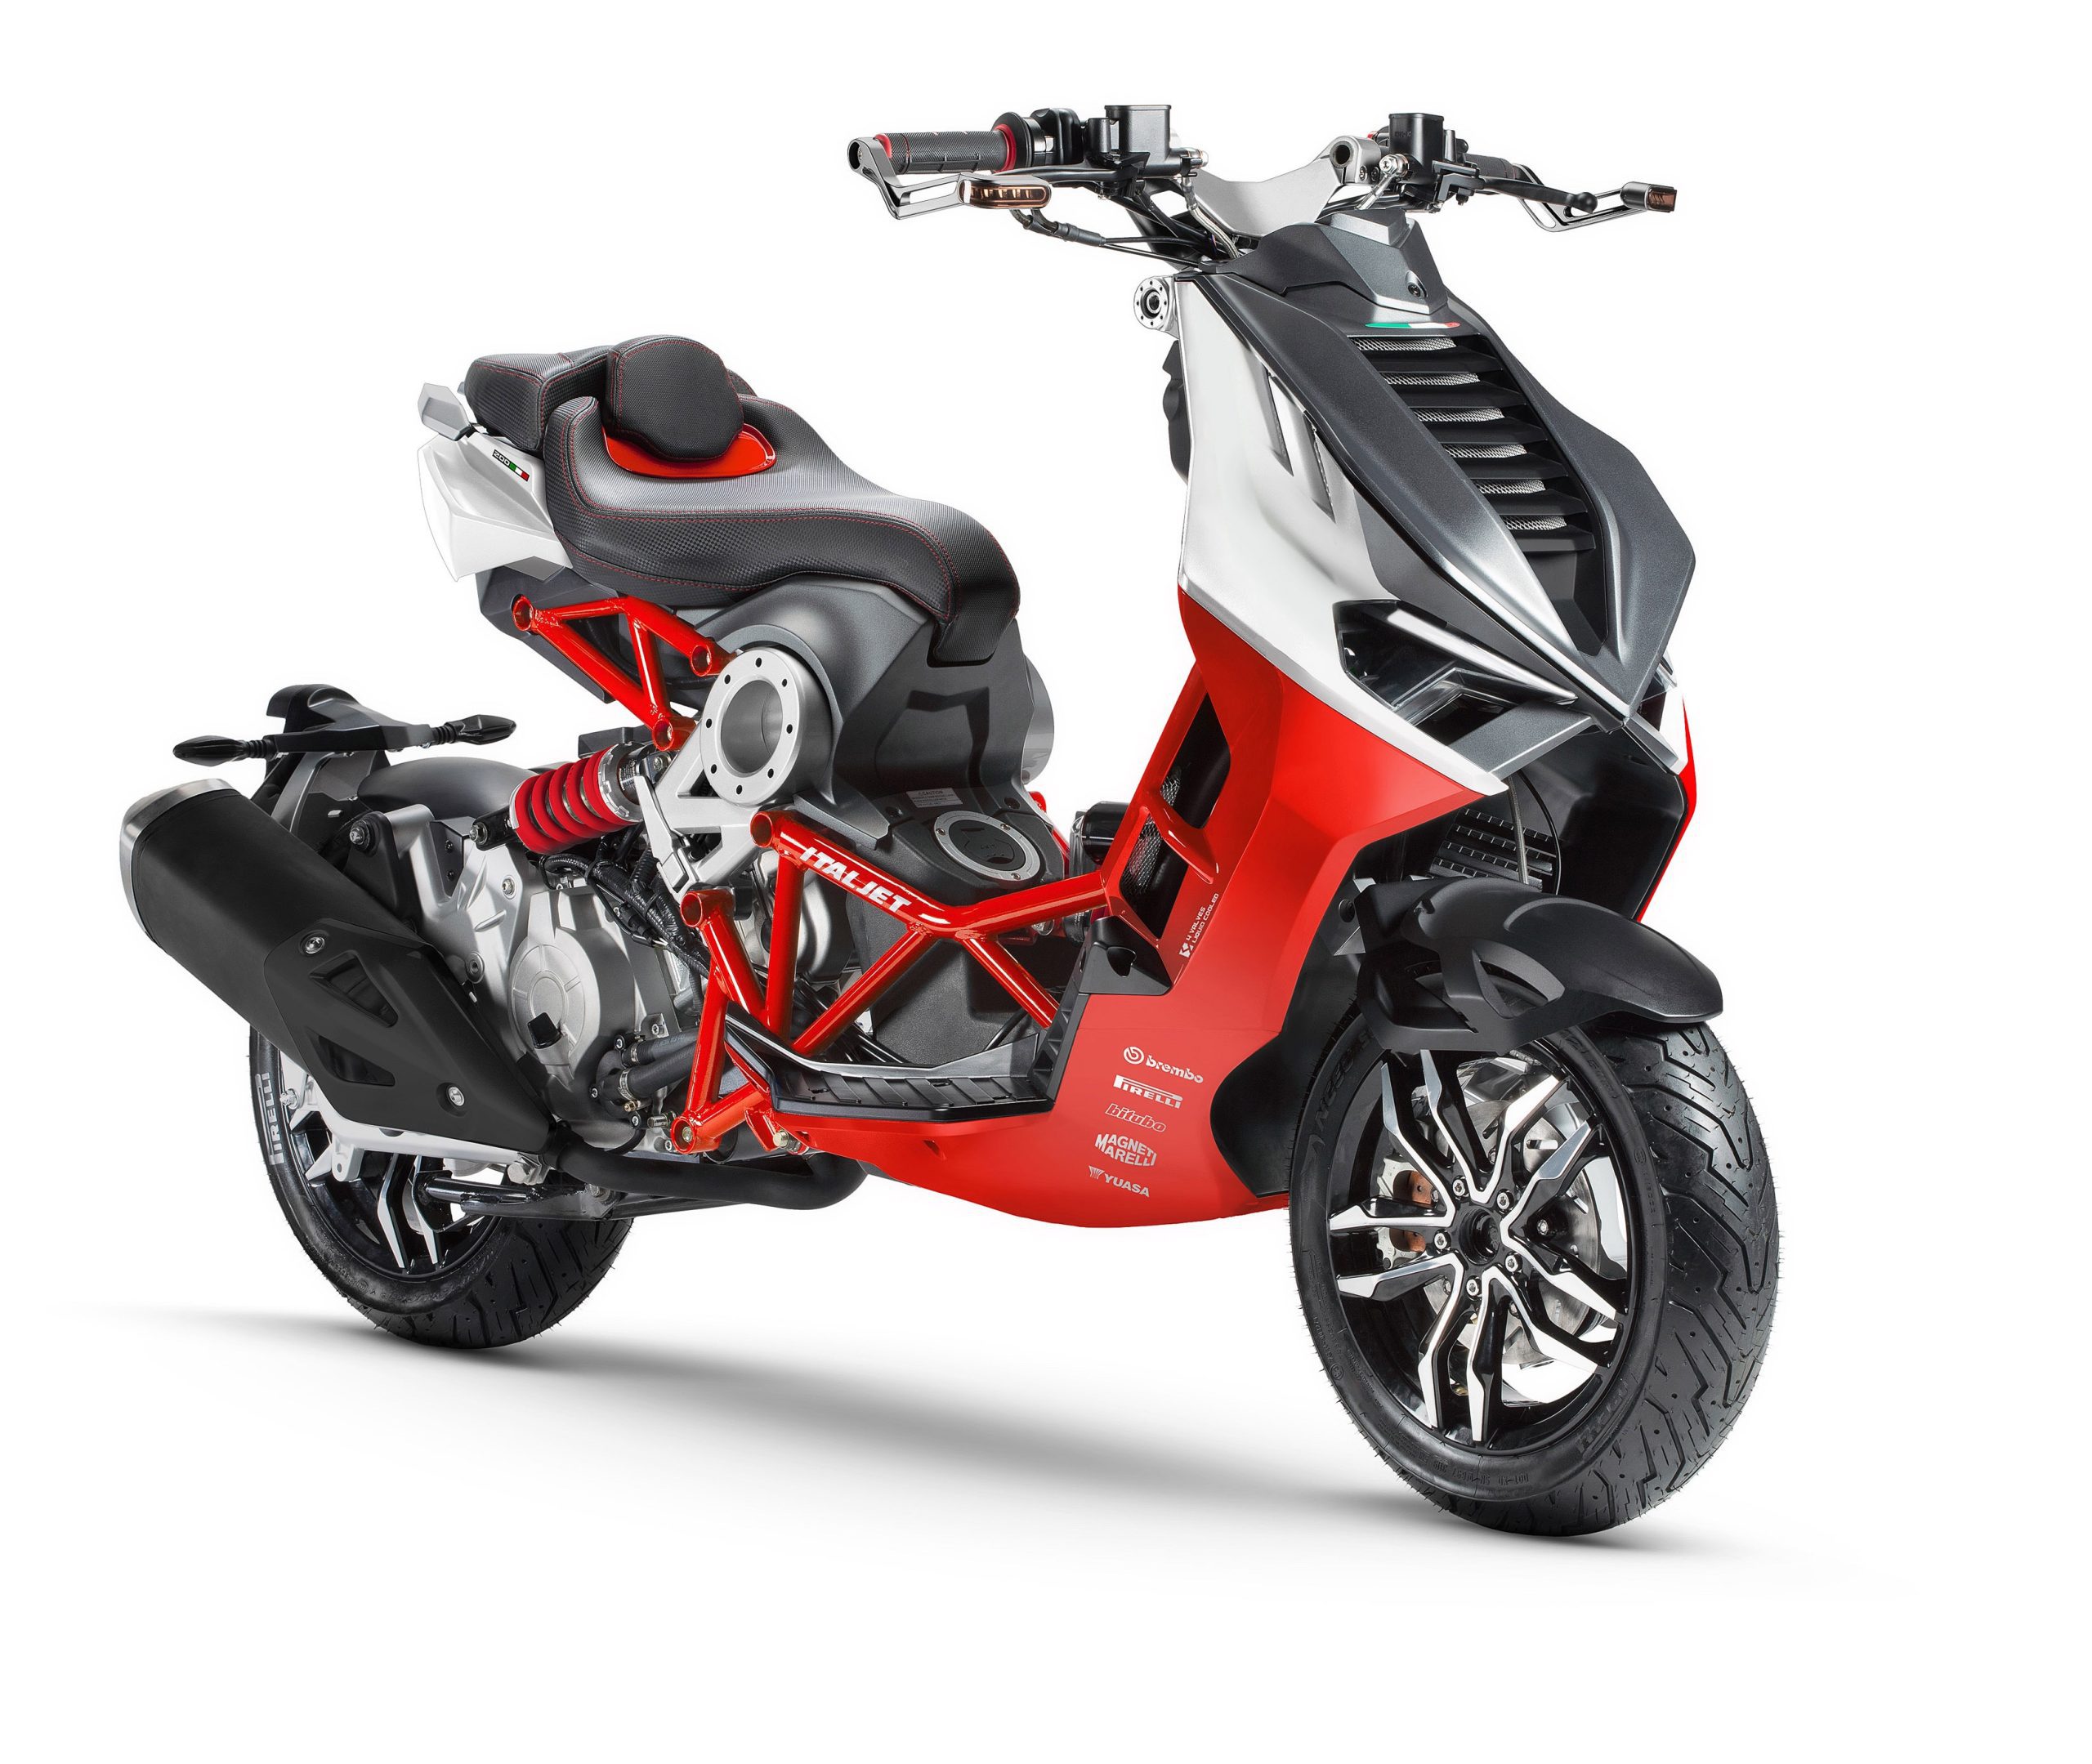 Ducati design webBikeWorld - scooter has Italjet